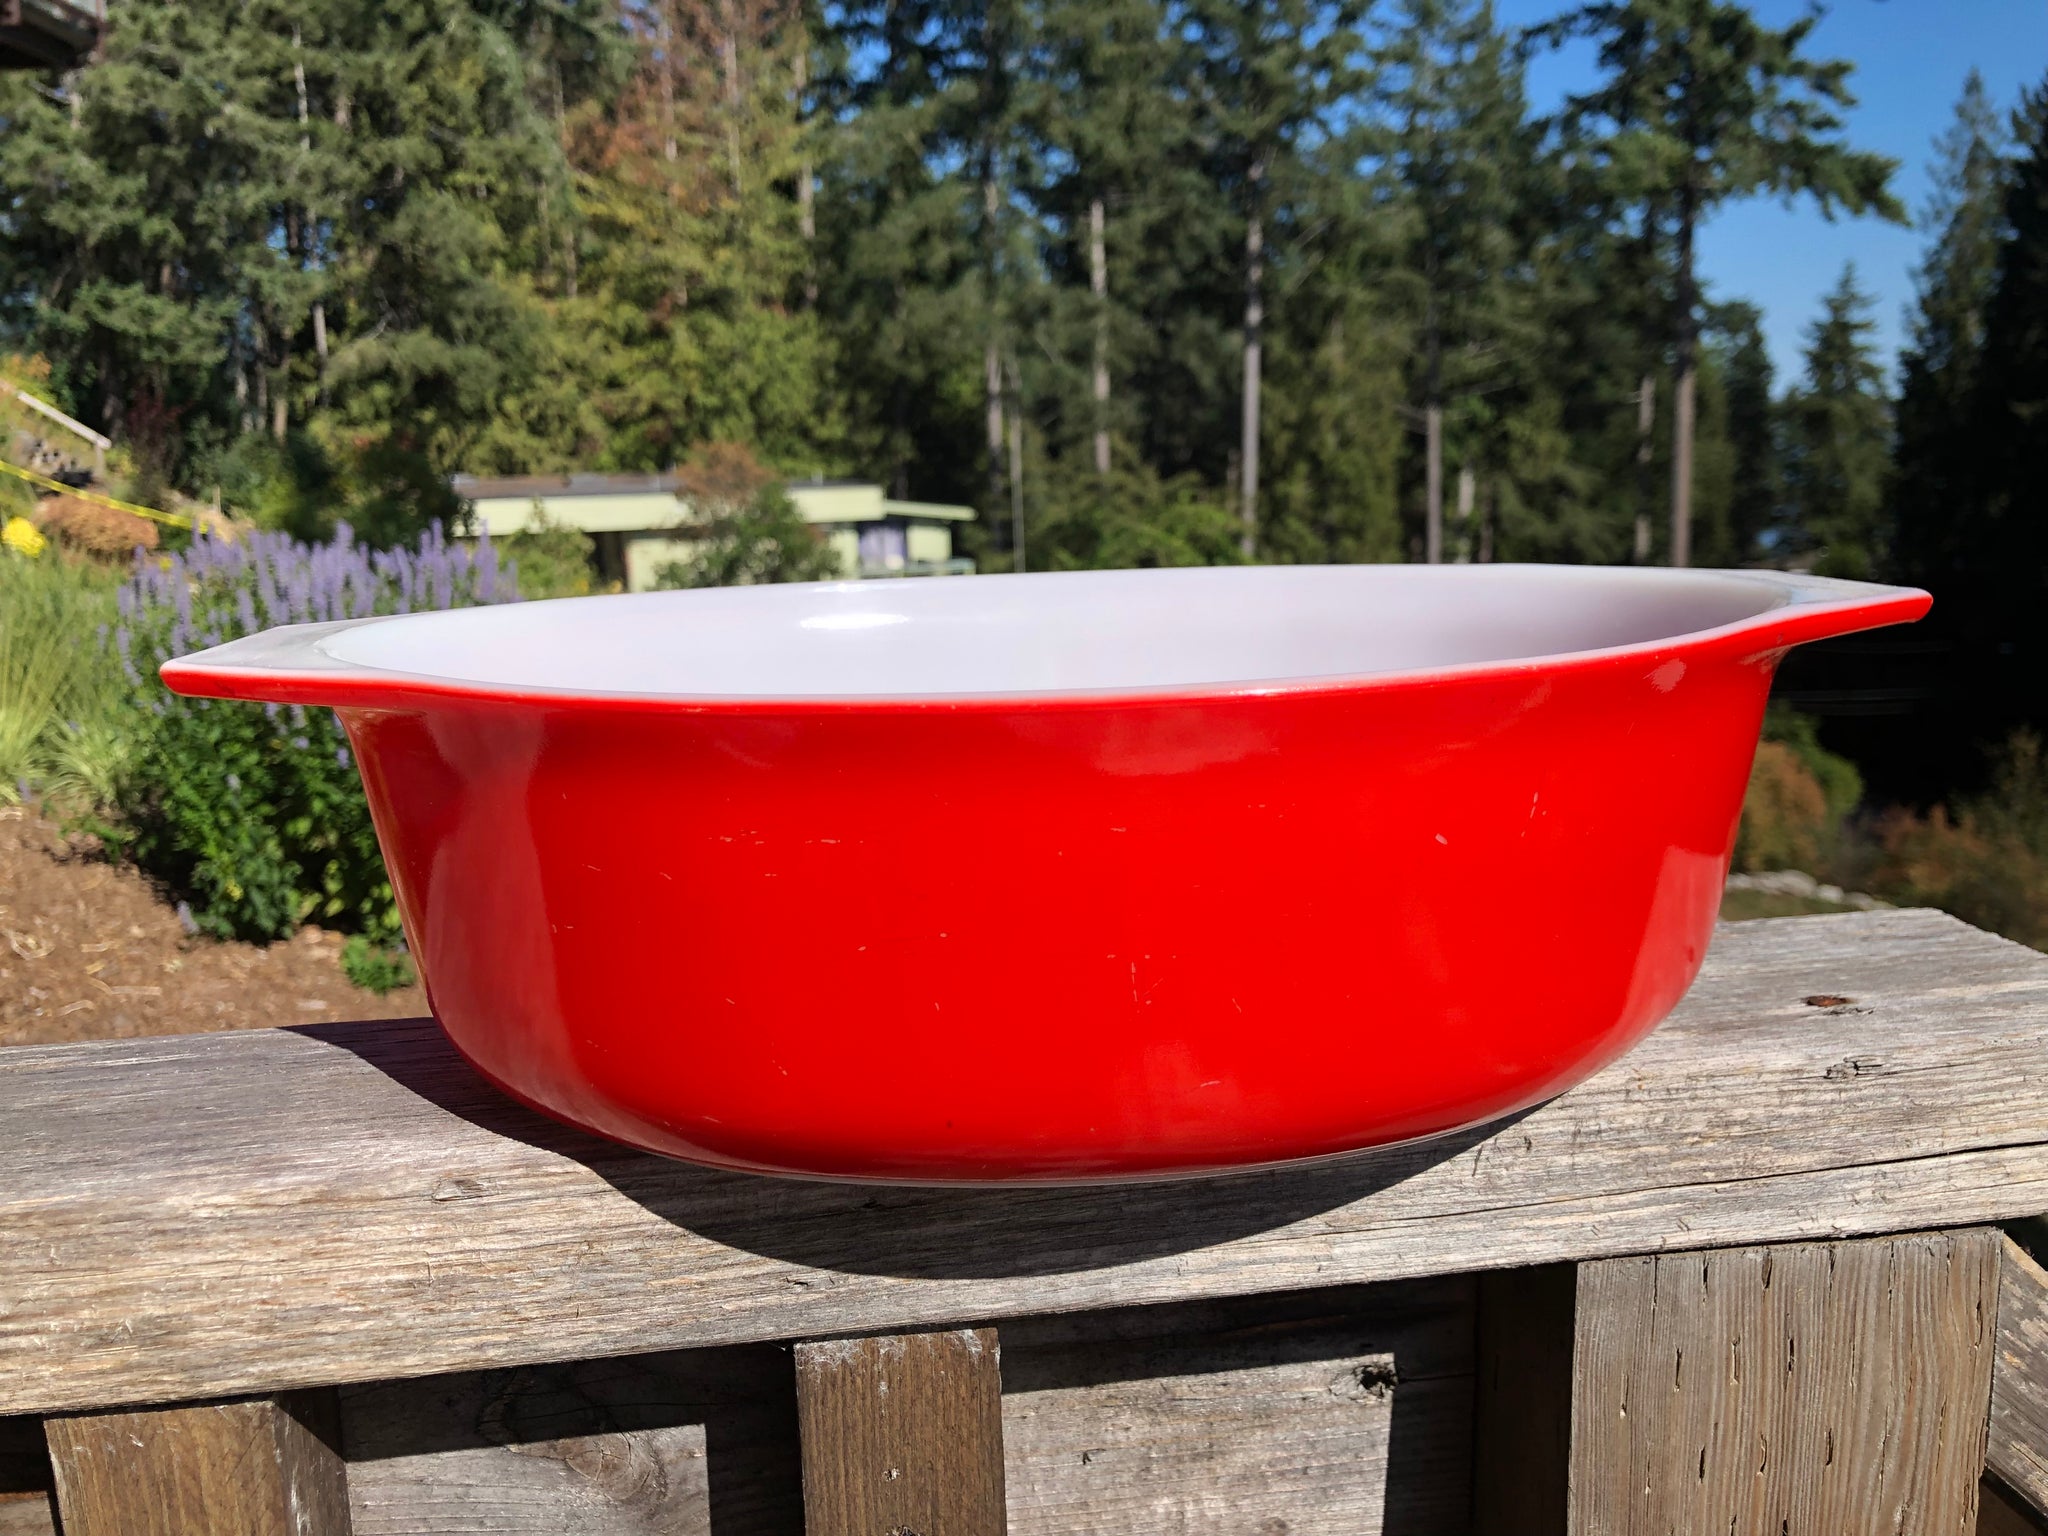 Vintage Pyrex 2.5 quart oval casserole baking dish red